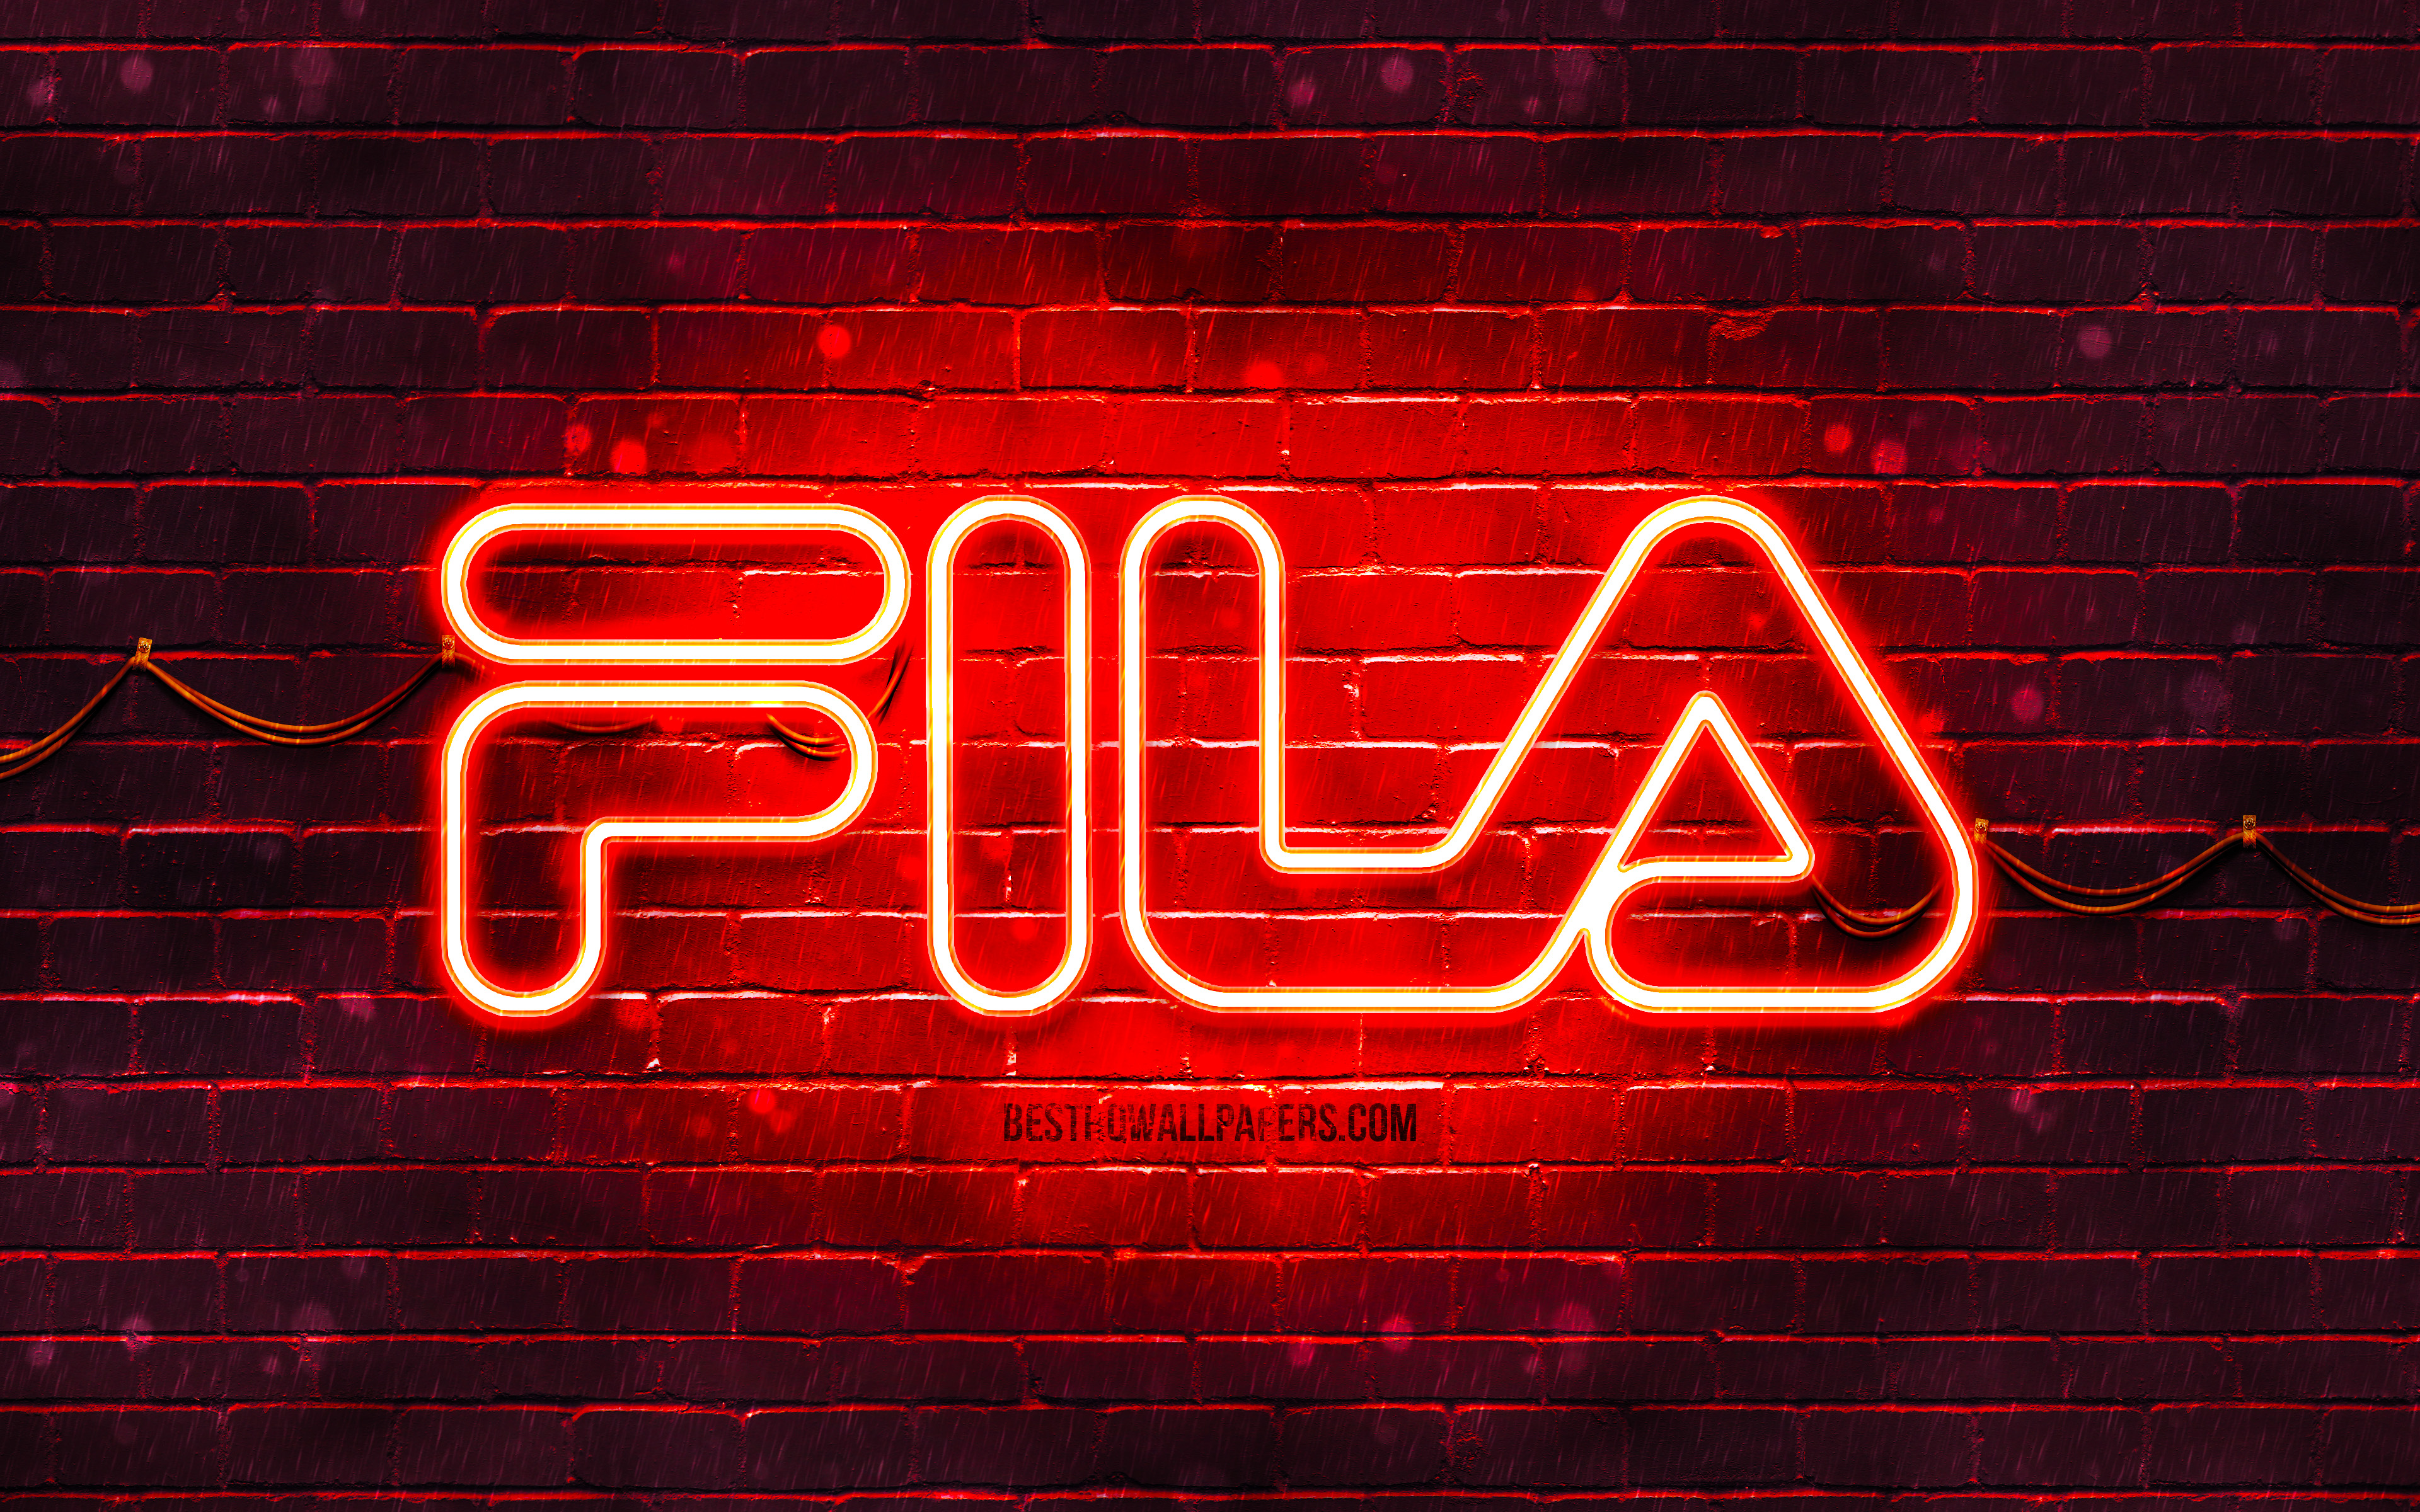 Download wallpaper Fila red logo, 4k, red brickwall, Fila logo, brands, Fila neon logo, Fila for desktop with resolution 3840x2400. High Quality HD picture wallpaper